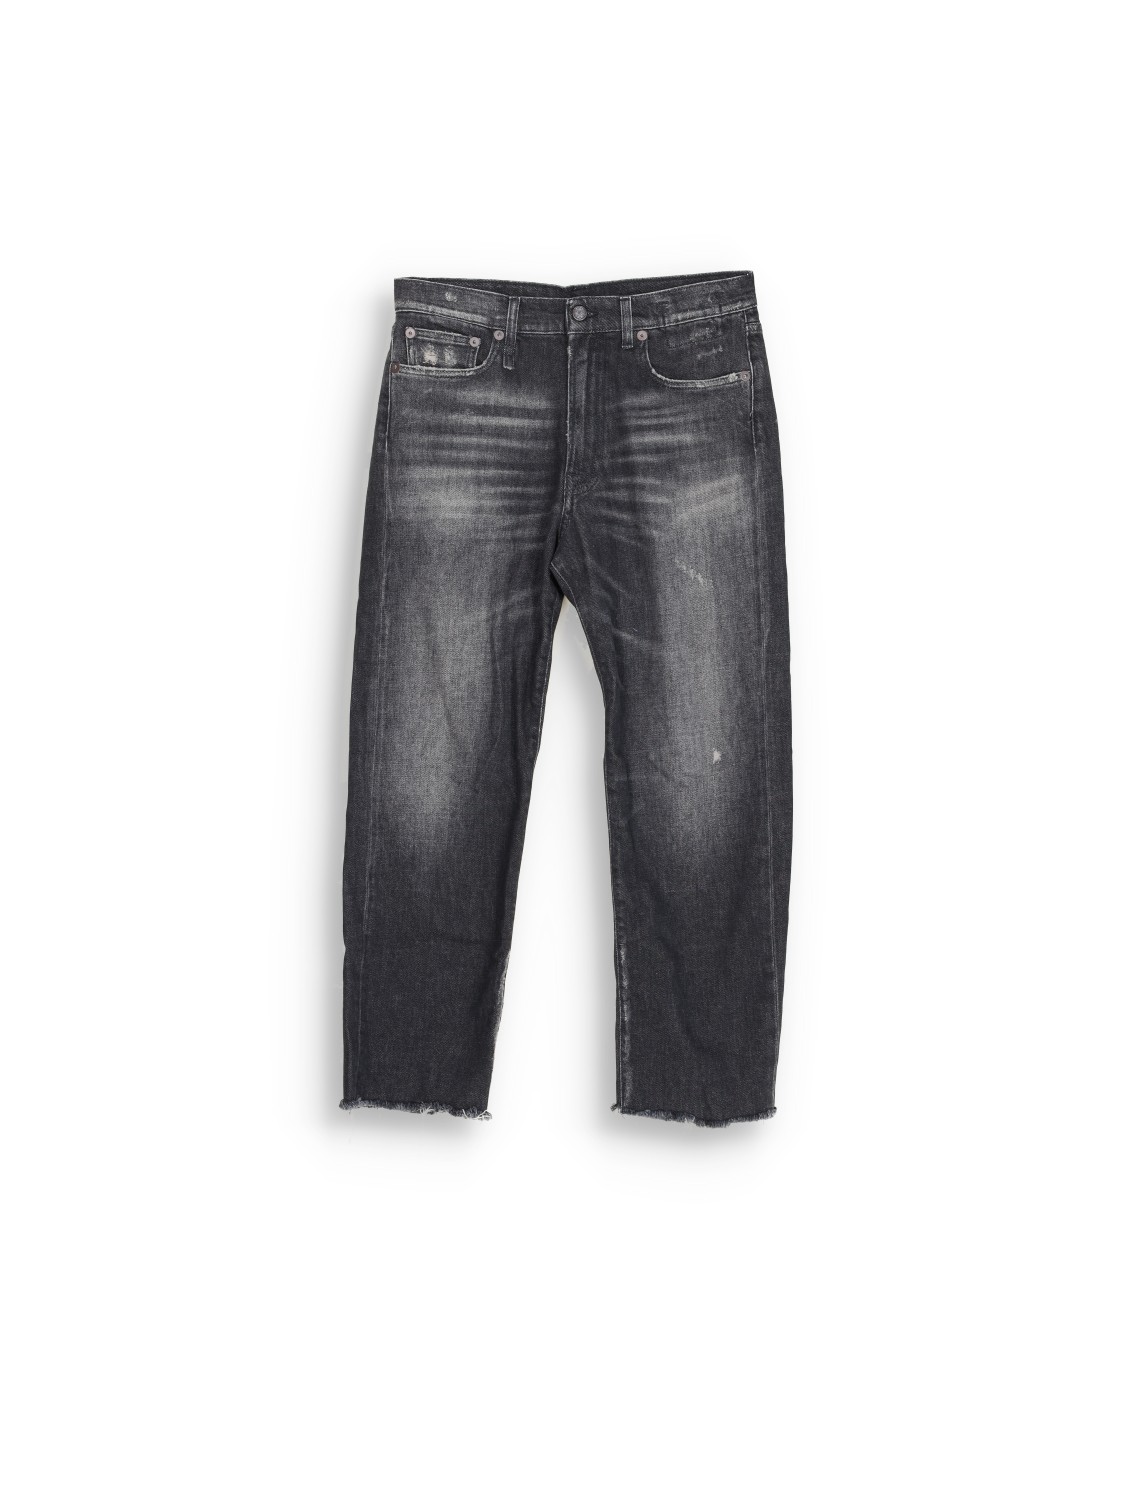 R13 Boyfriend jeans made of cotton grey 26